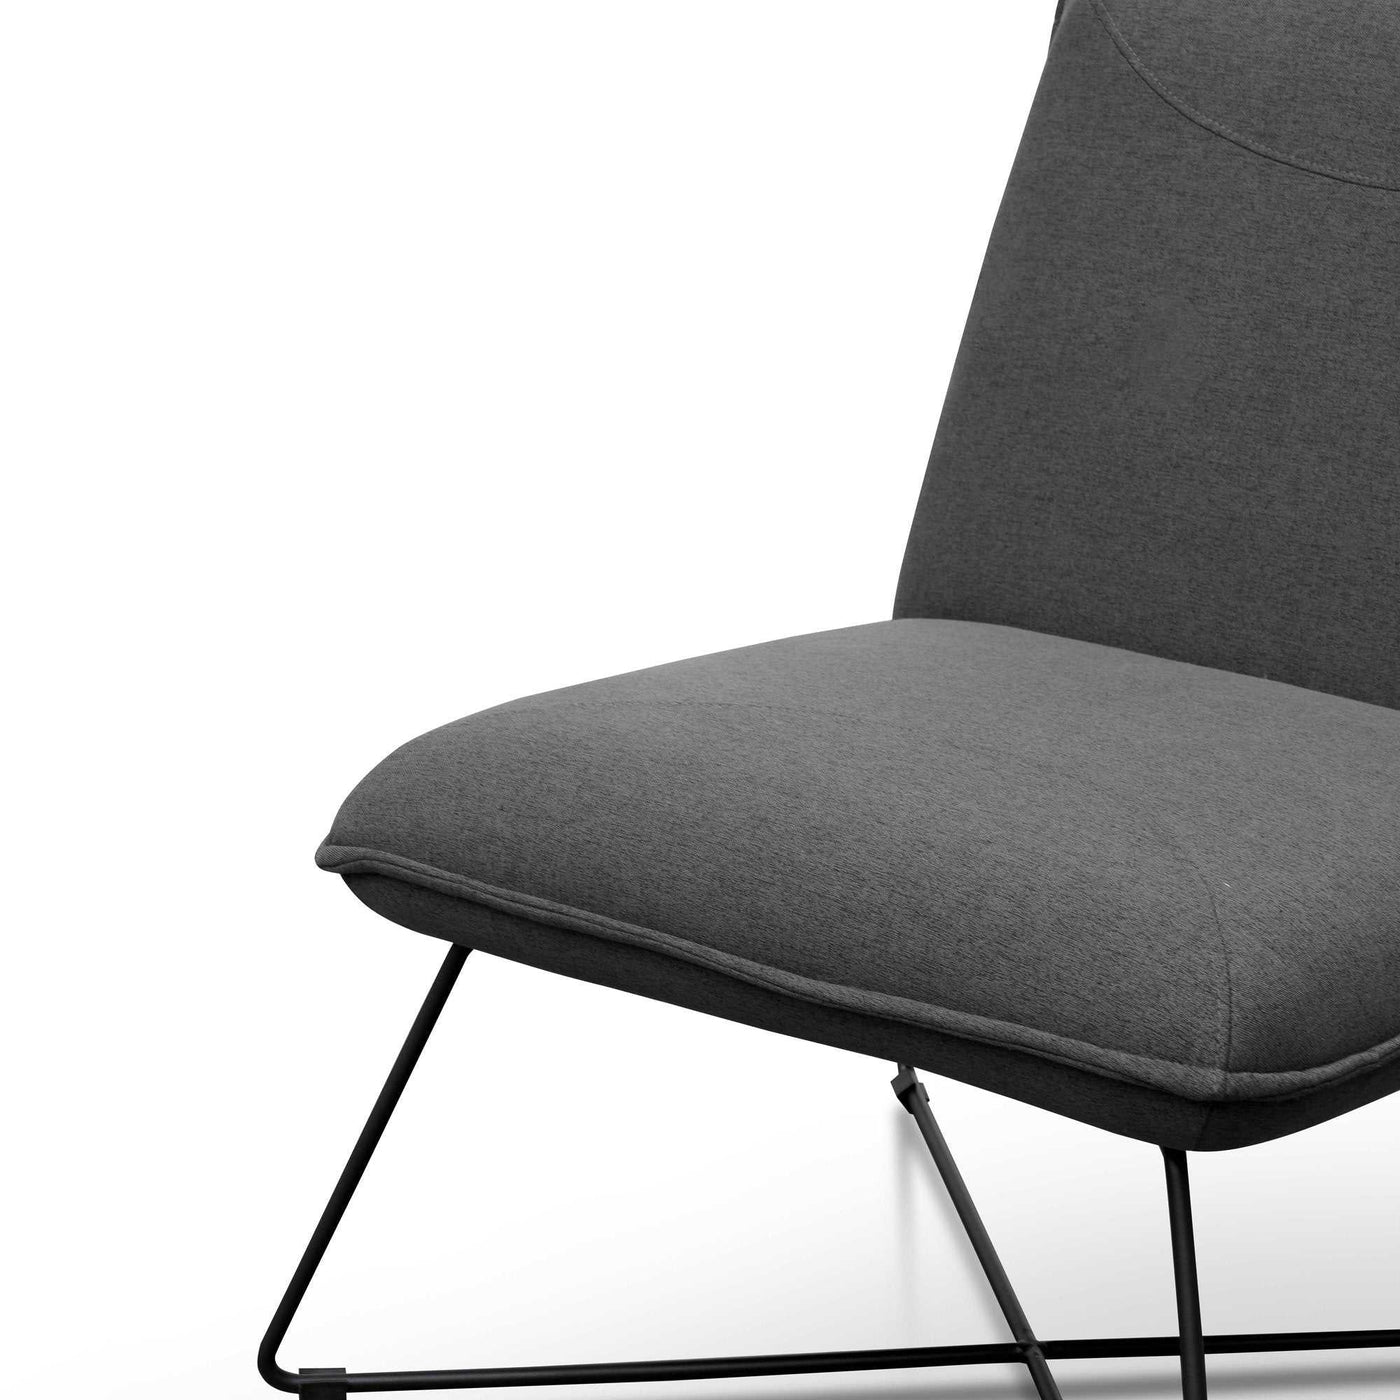 Fabric Lounge Chair in Dark Grey - Black Legs